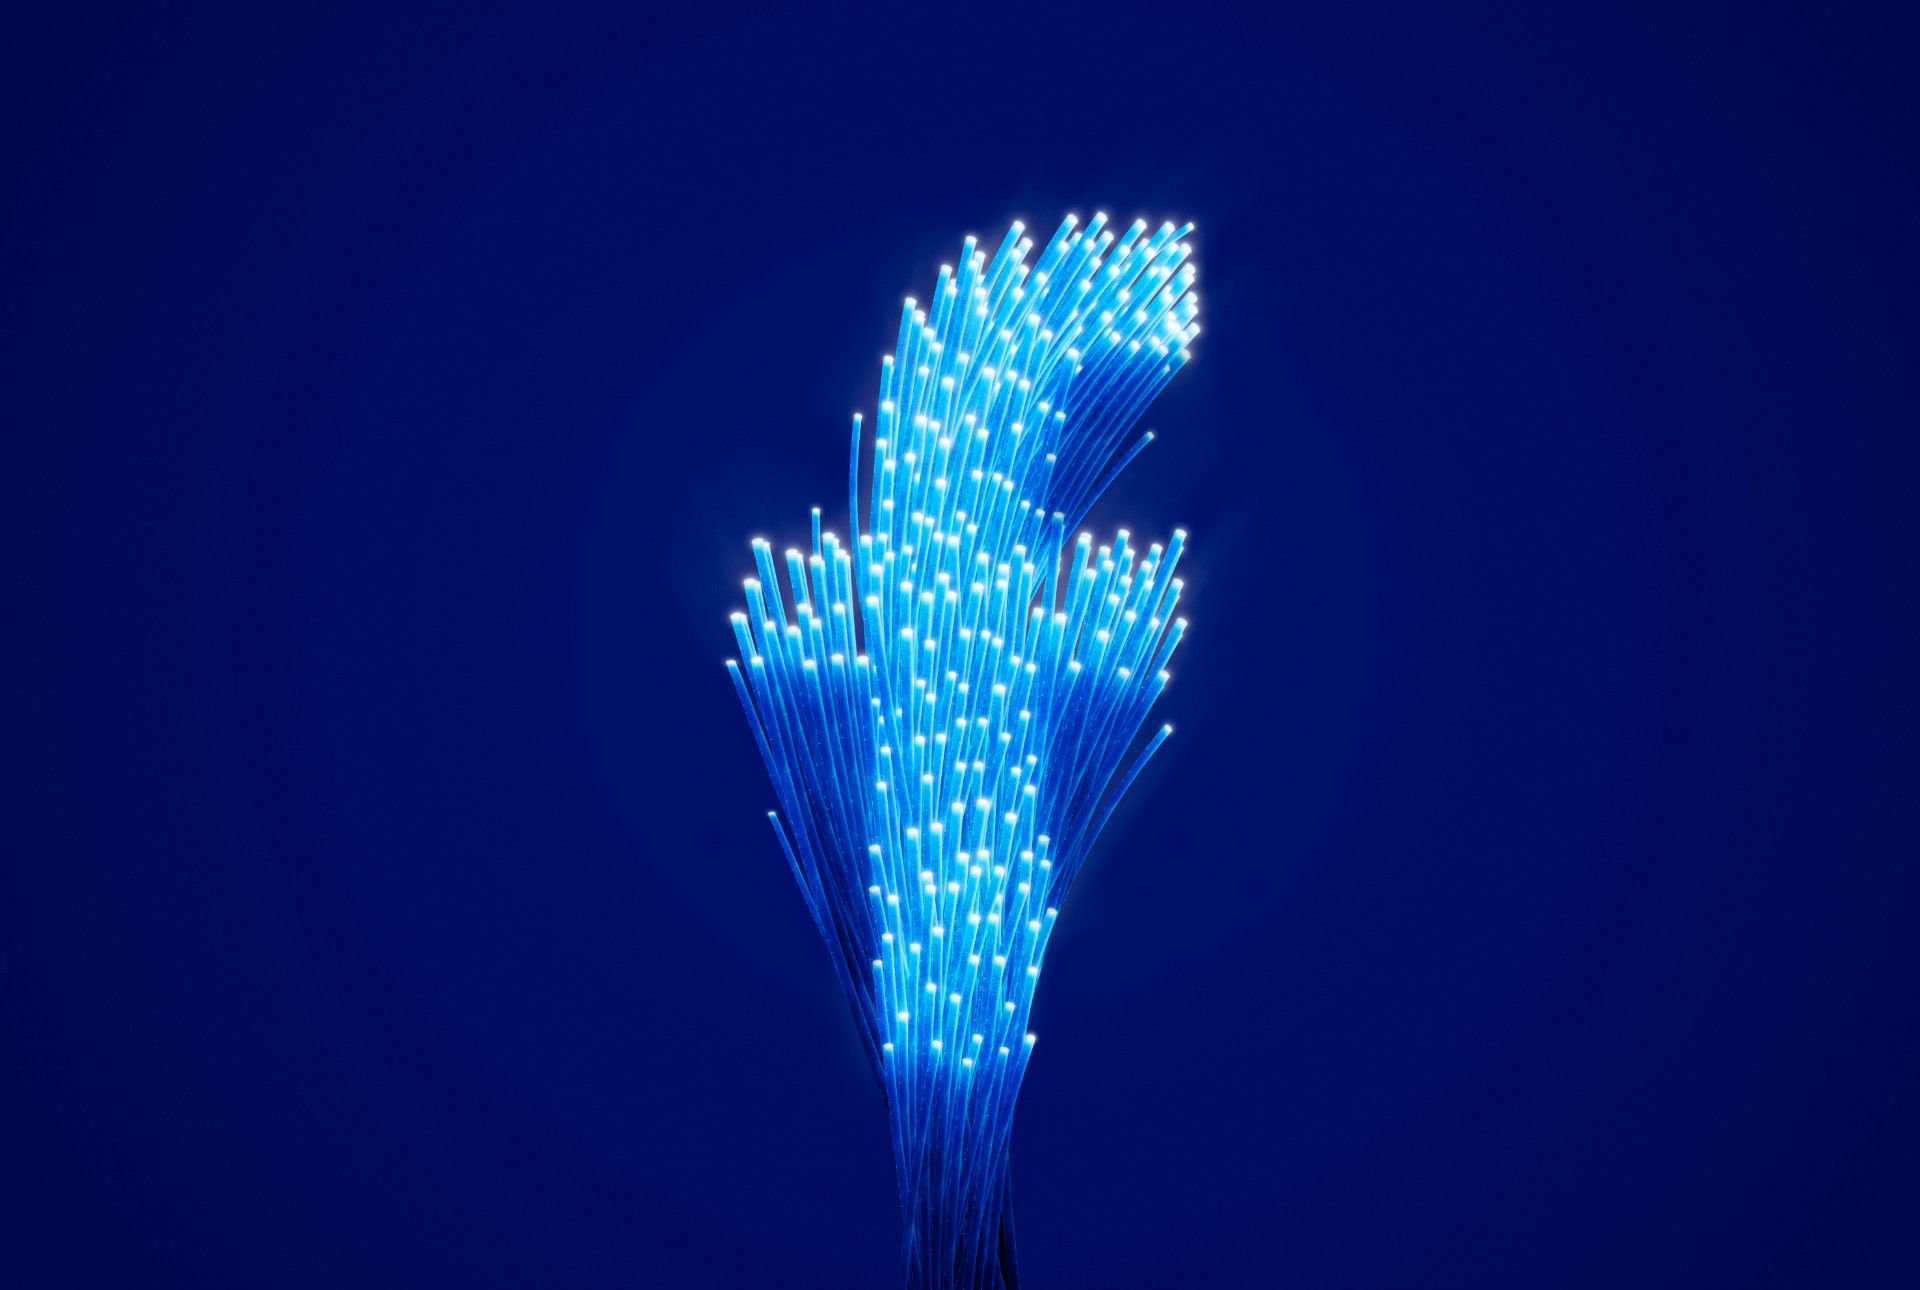 Facebook "f" logo made up of fiber optic cables - data transfers